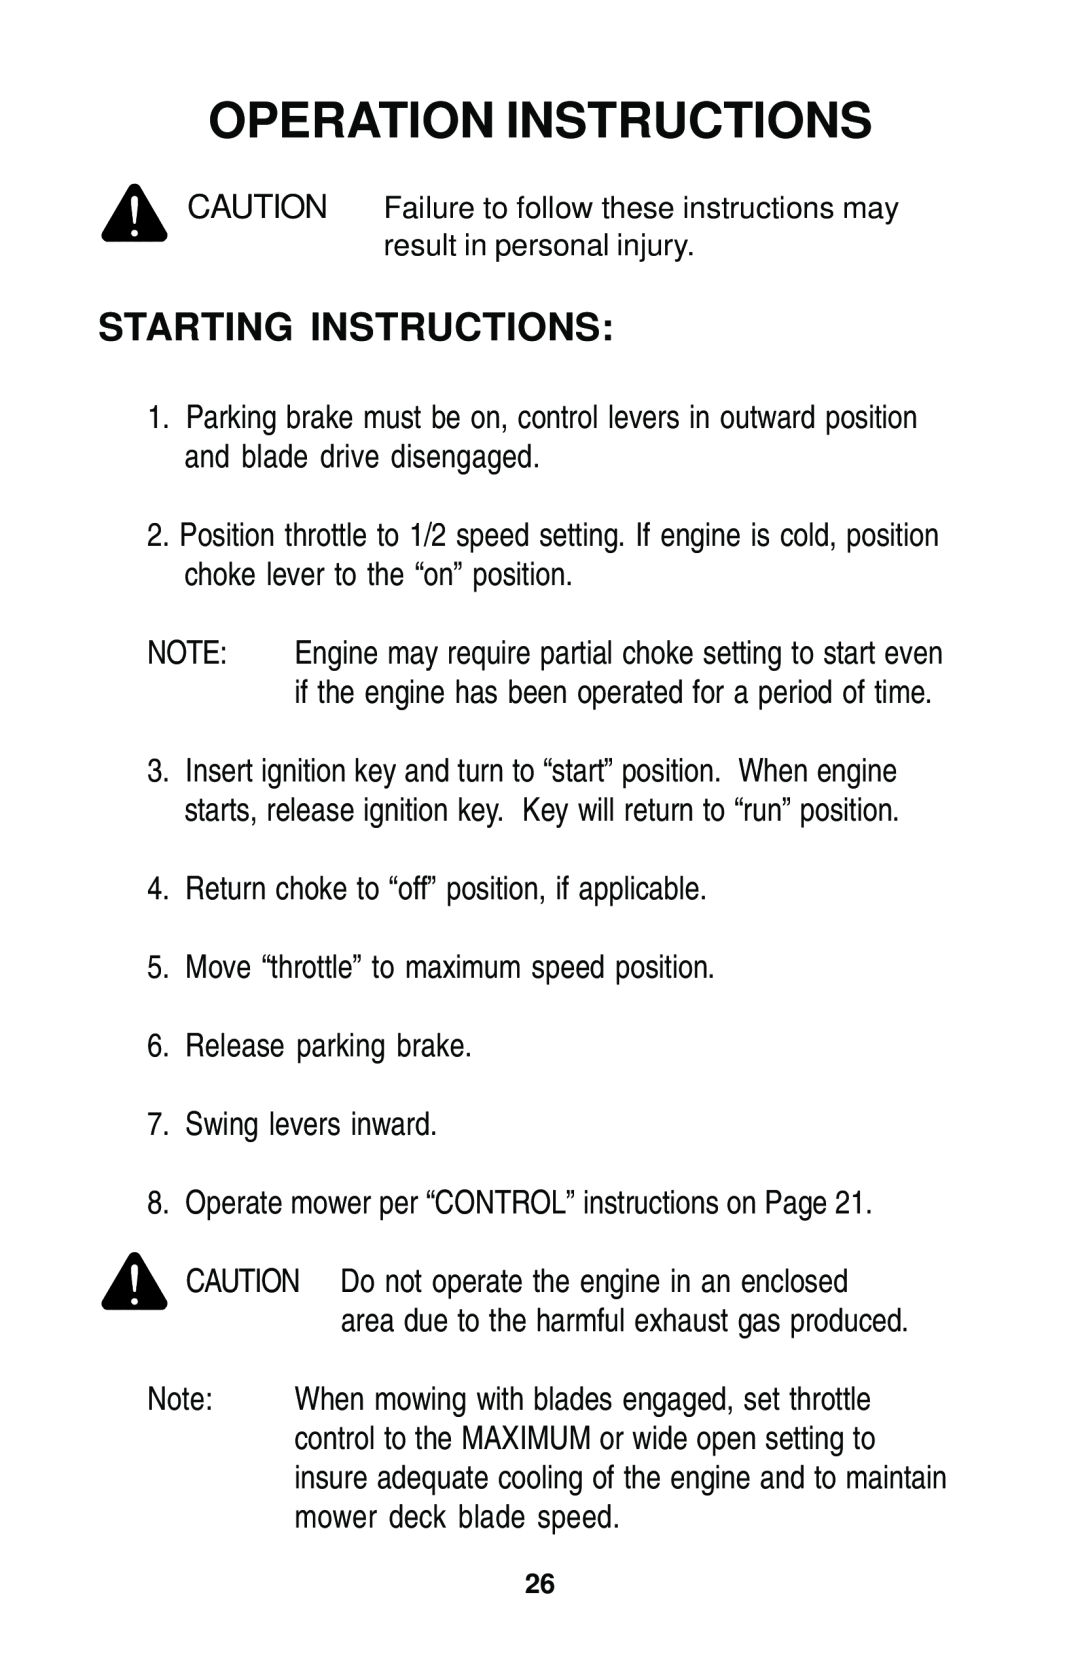 Dixon 17823-0704 manual Starting Instructions, Operation Instructions 